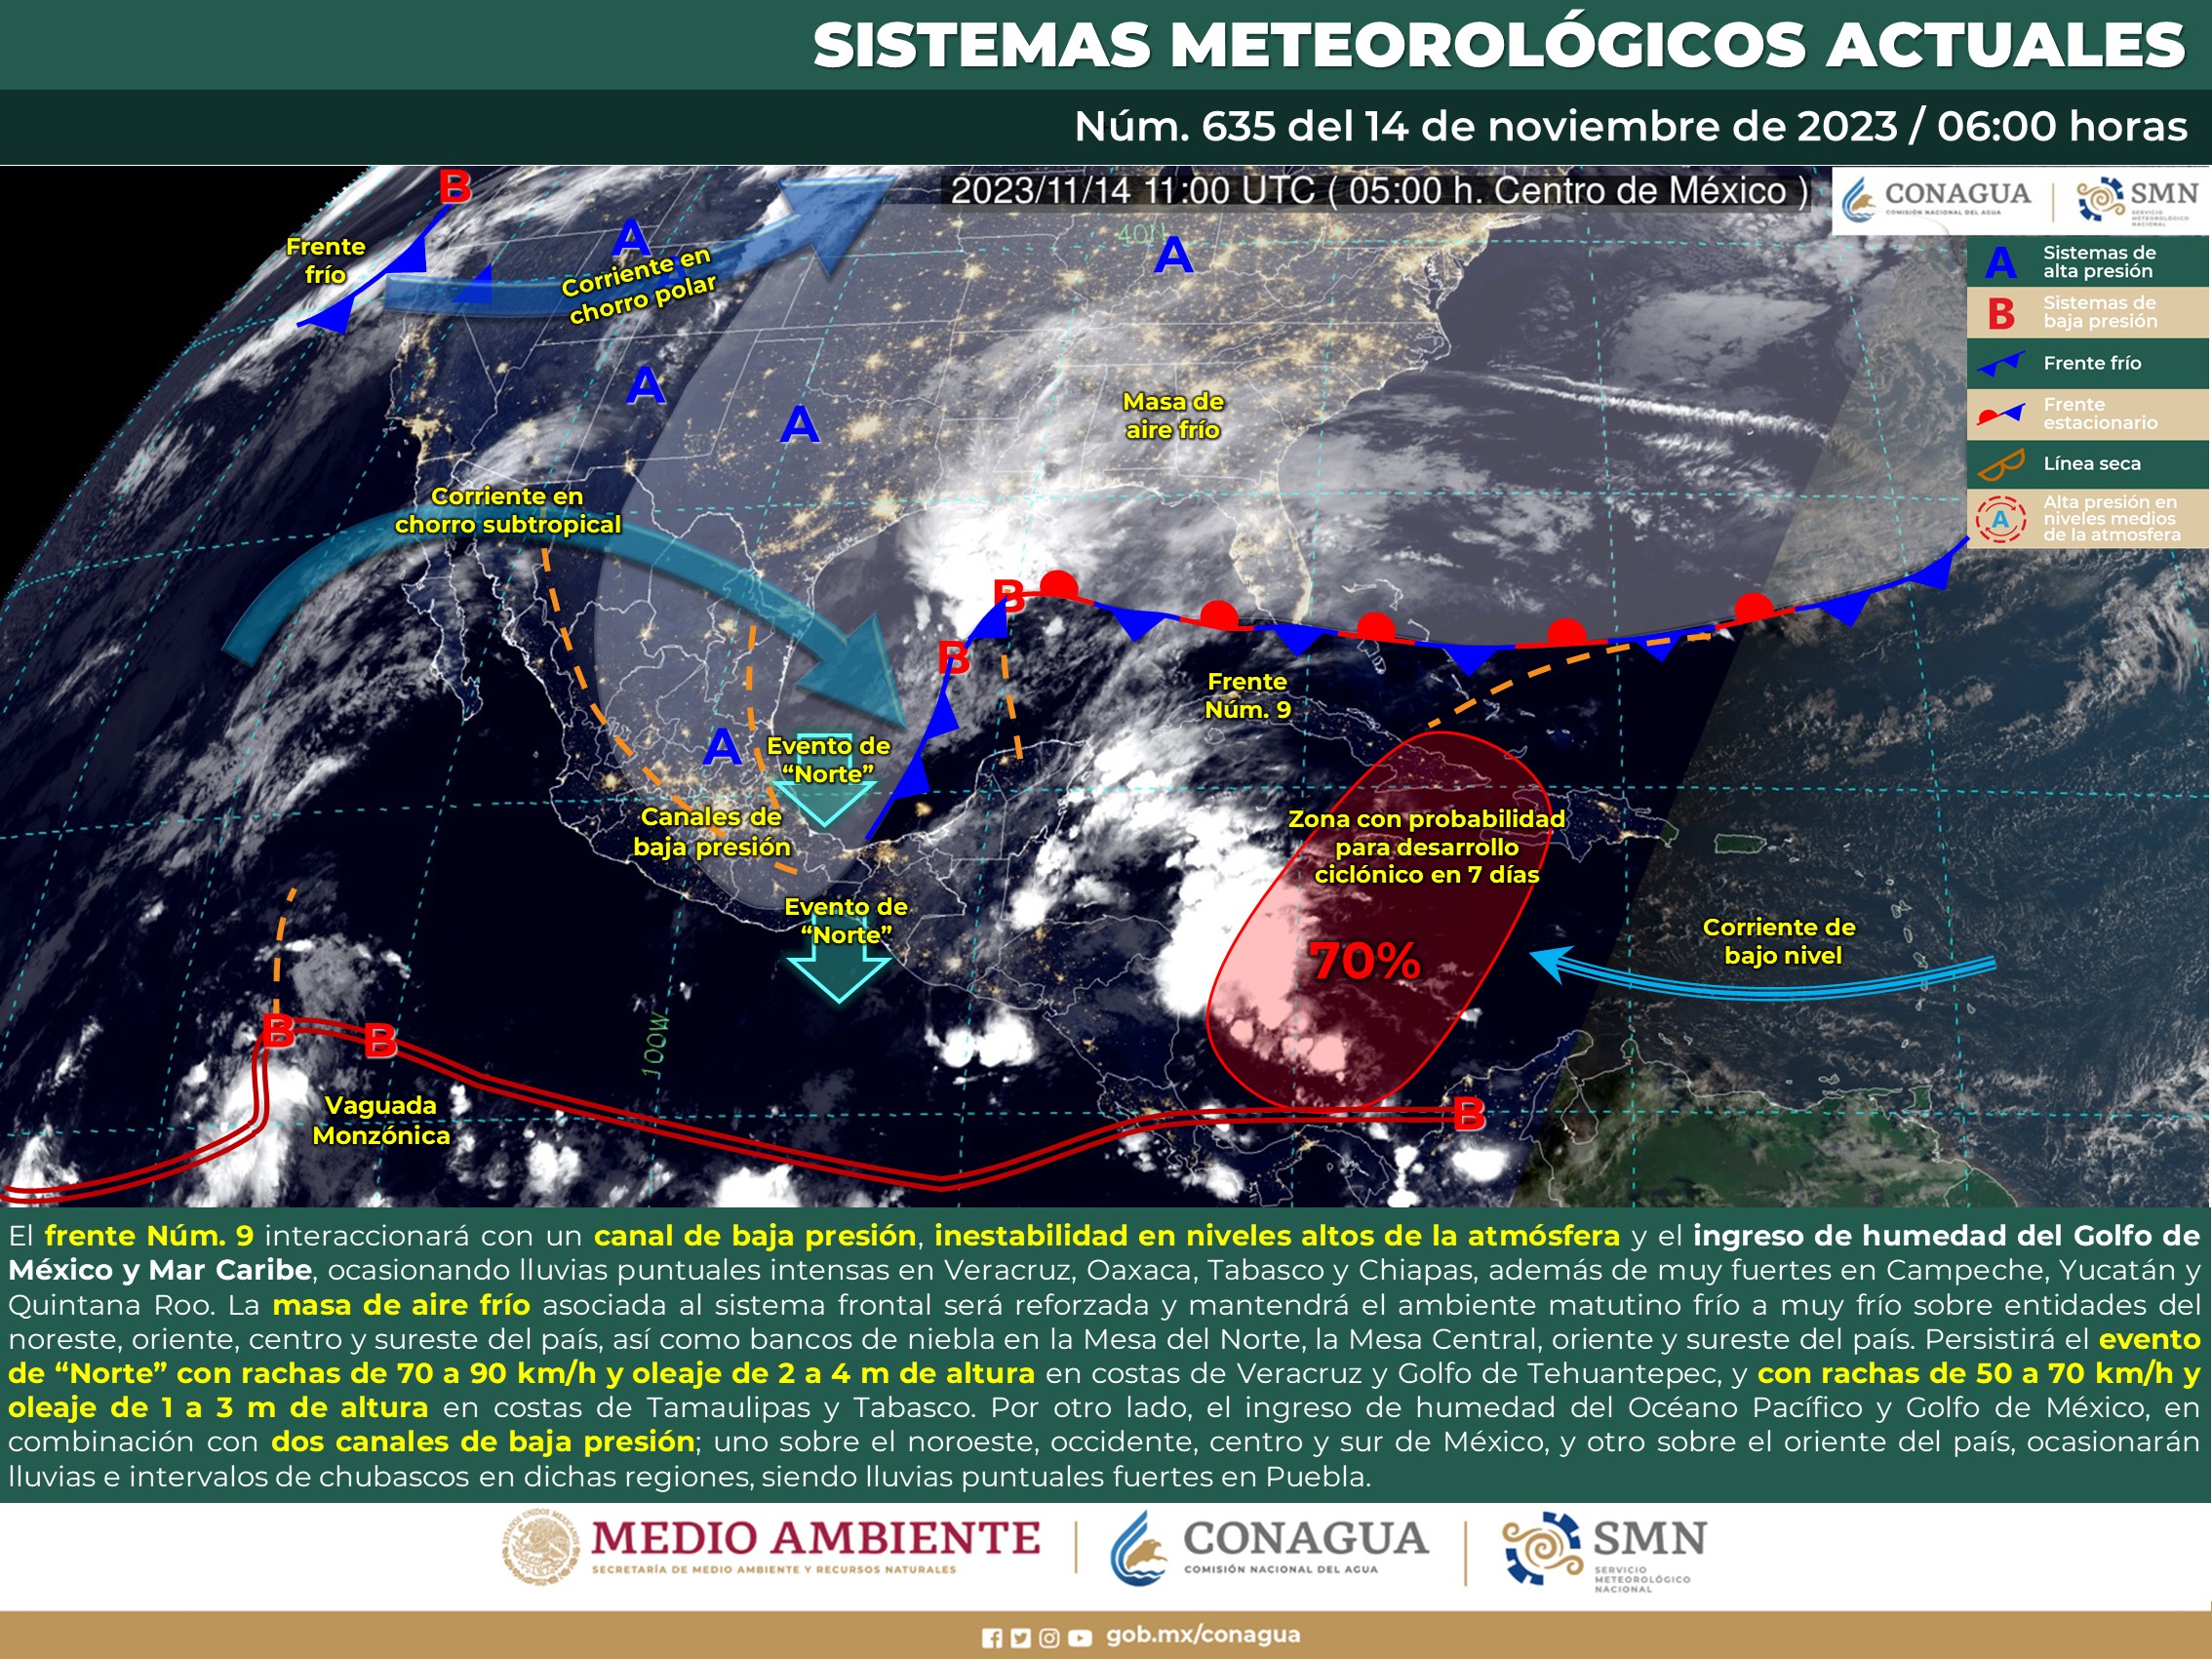 SMN prevé lluvias intensas en Veracruz, Oaxaca, Tabasco y Chiapas